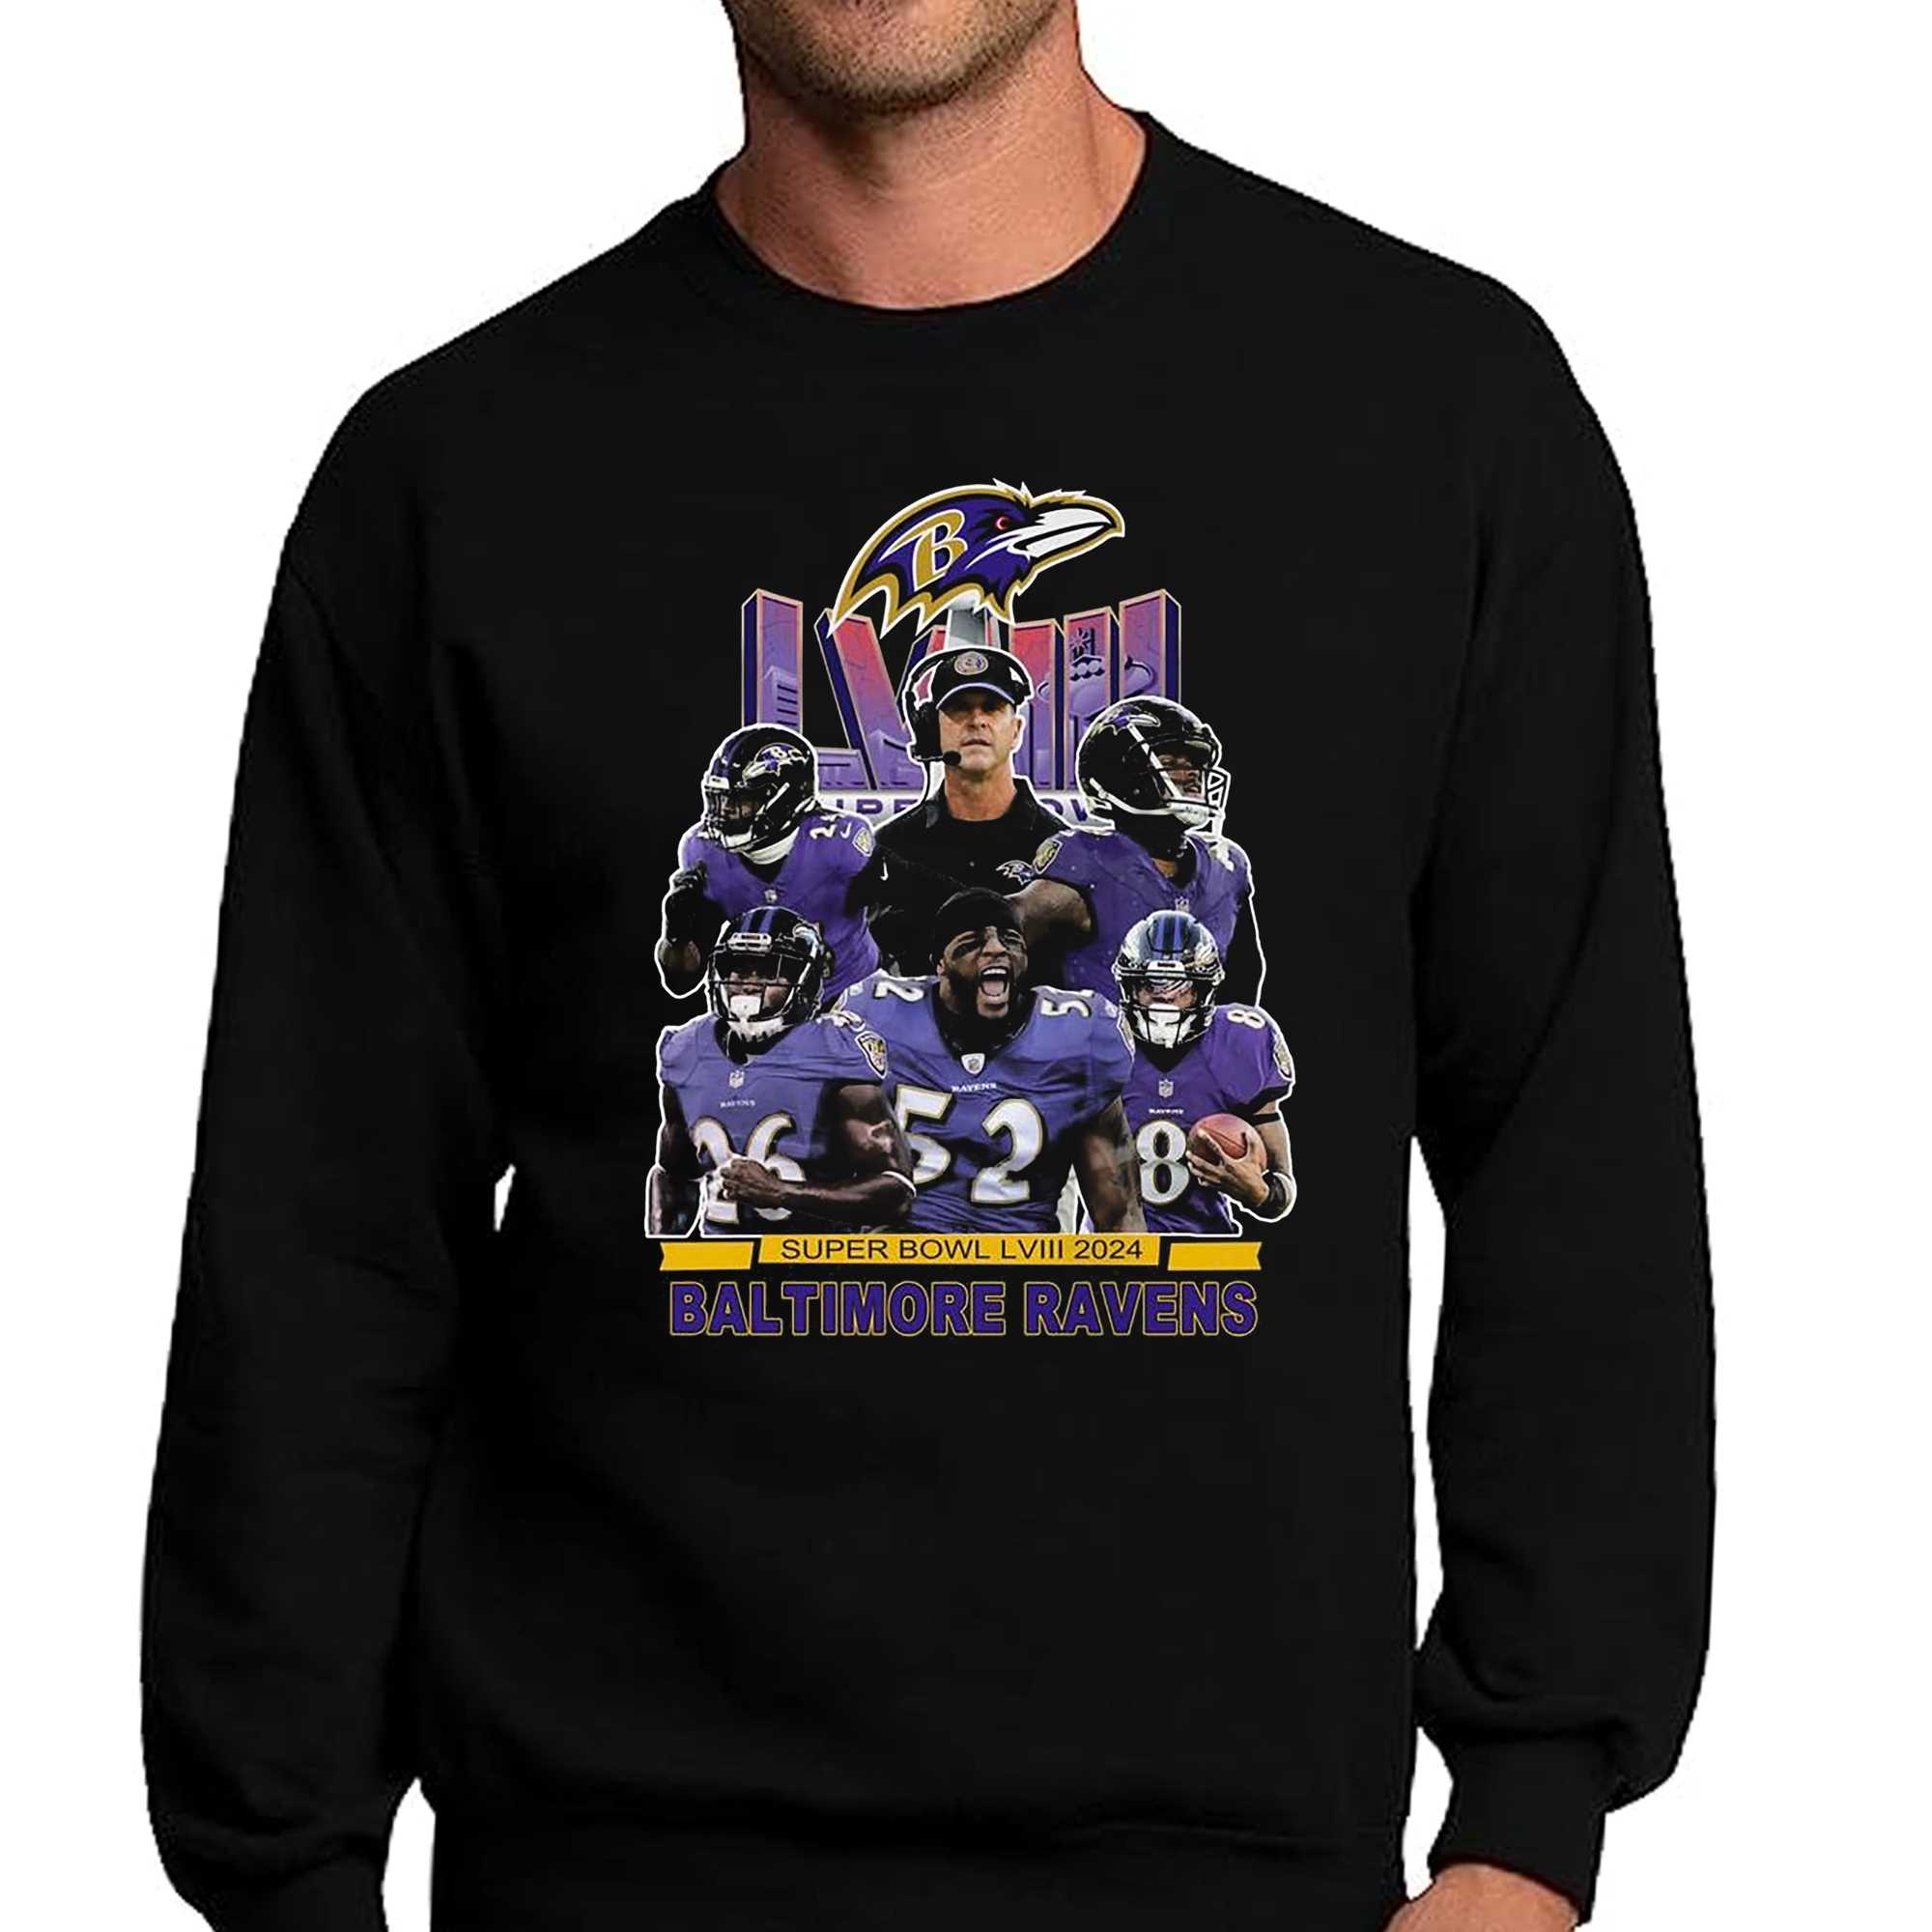 Super Bowl Lviii 2024 Baltimore Ravens T-shirt Sweatshirt Hoodie